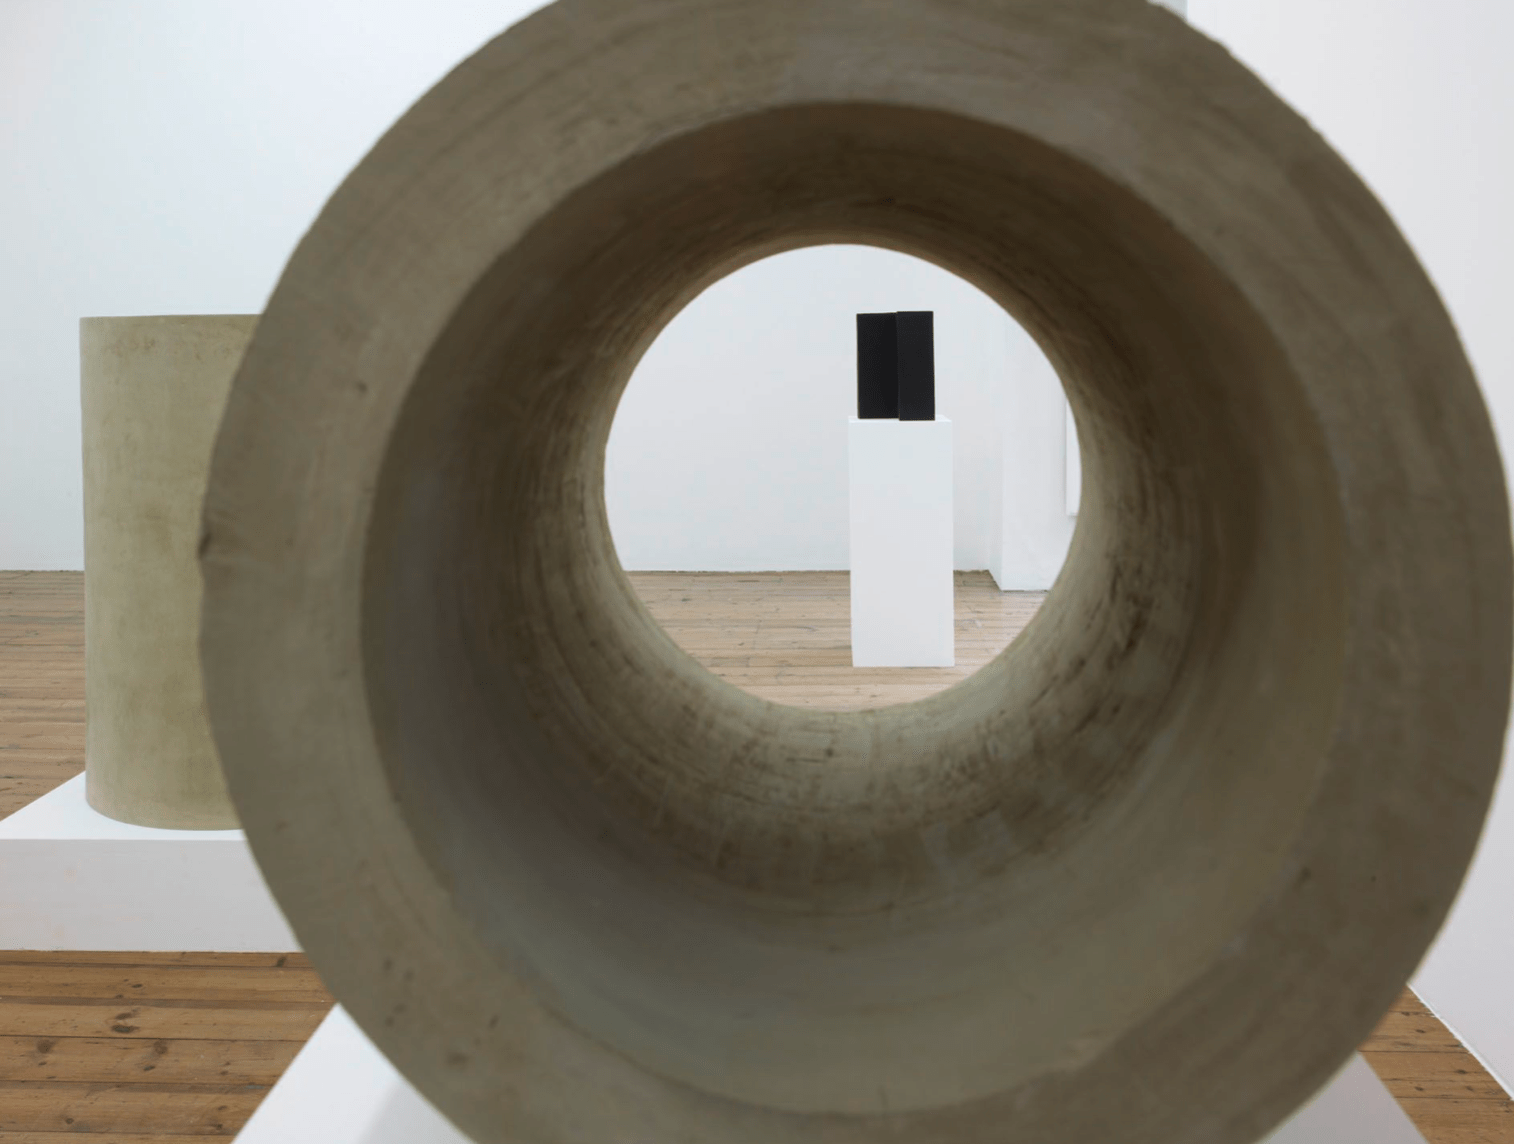 Peter Fischli / David Weiss - "Walls, Corners, Tubes"